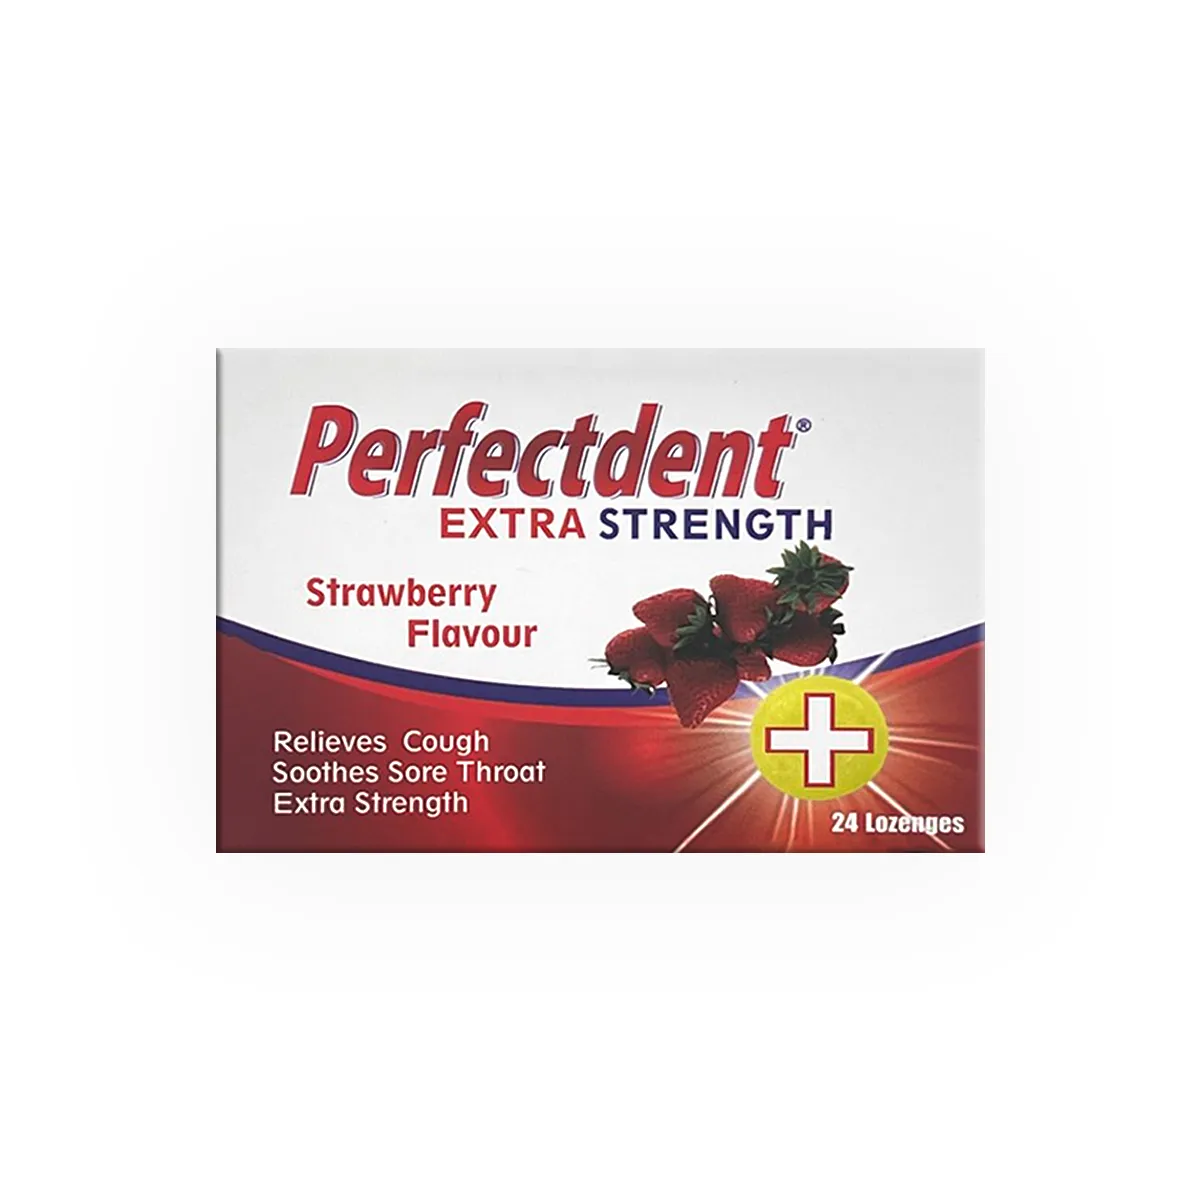 Perfectdent Extra Strength Lozenges 24s - Strawberry